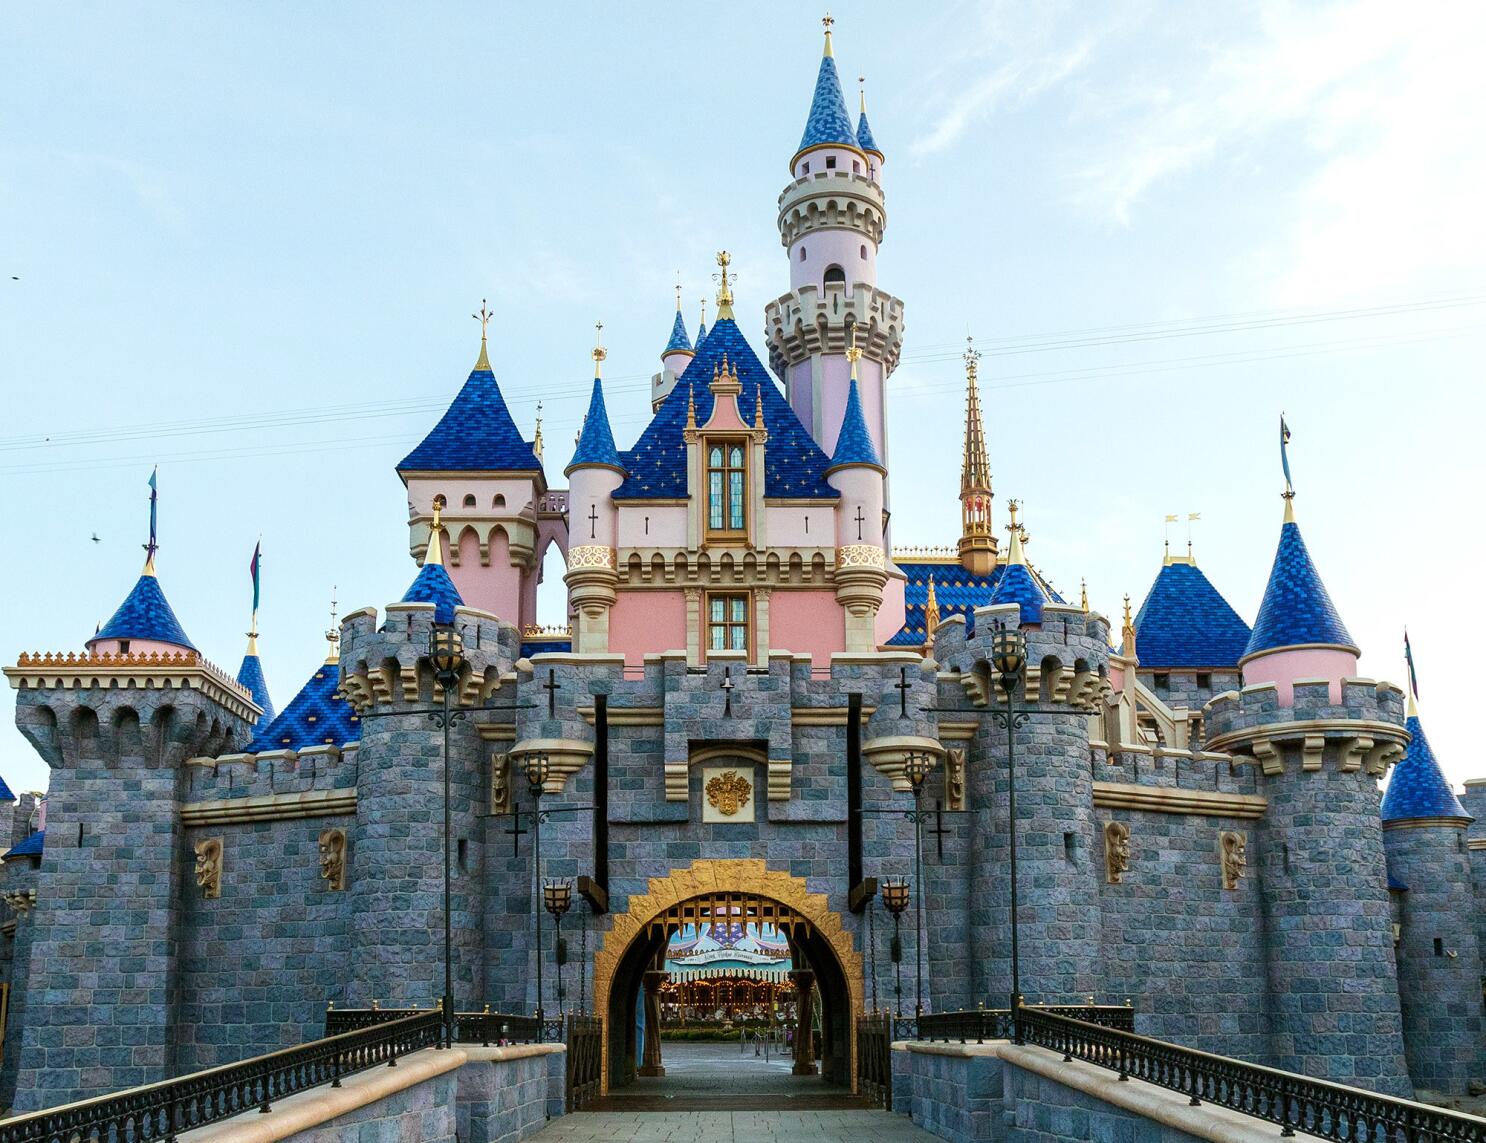 Sleeping Beauty Castle, Disneyland Park (Californie) - Les